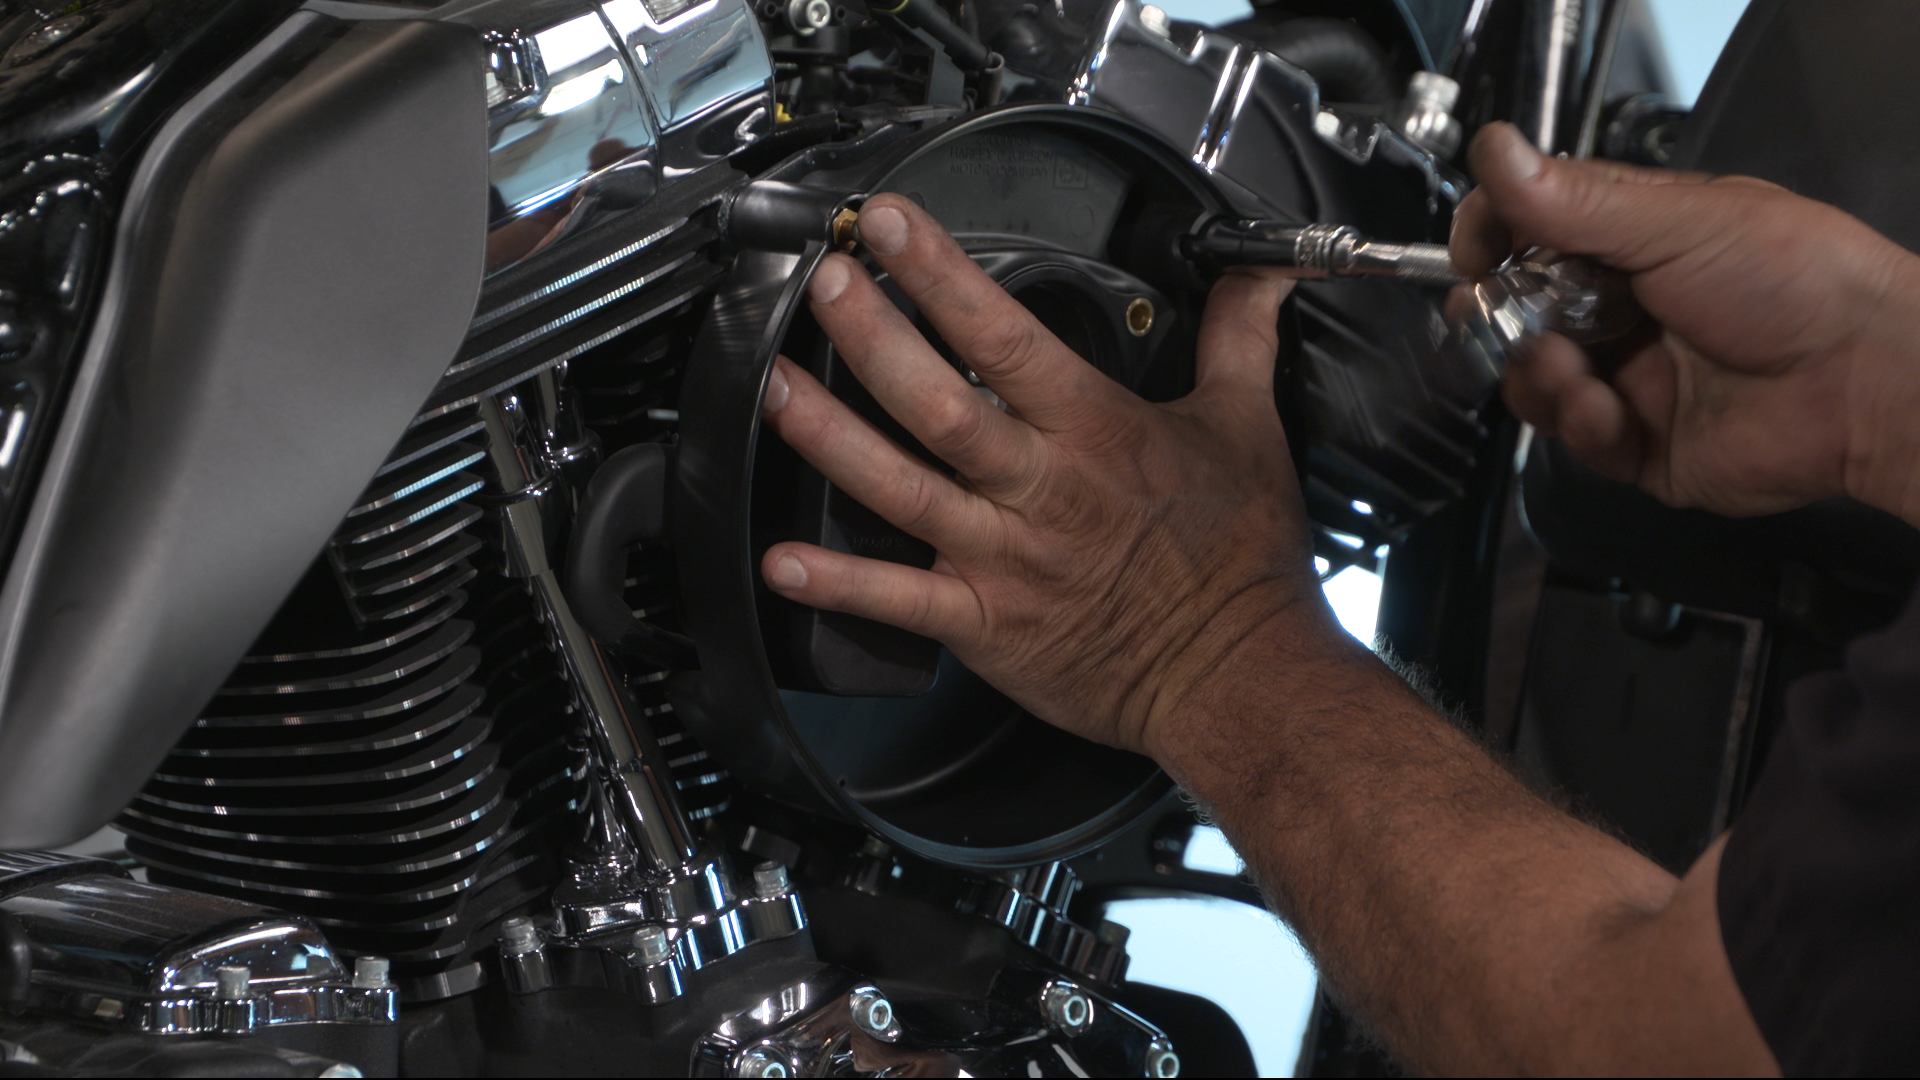 103 Twin Cam Performance Upgrades Fix My Hog Harley Repairs Fix My Hog